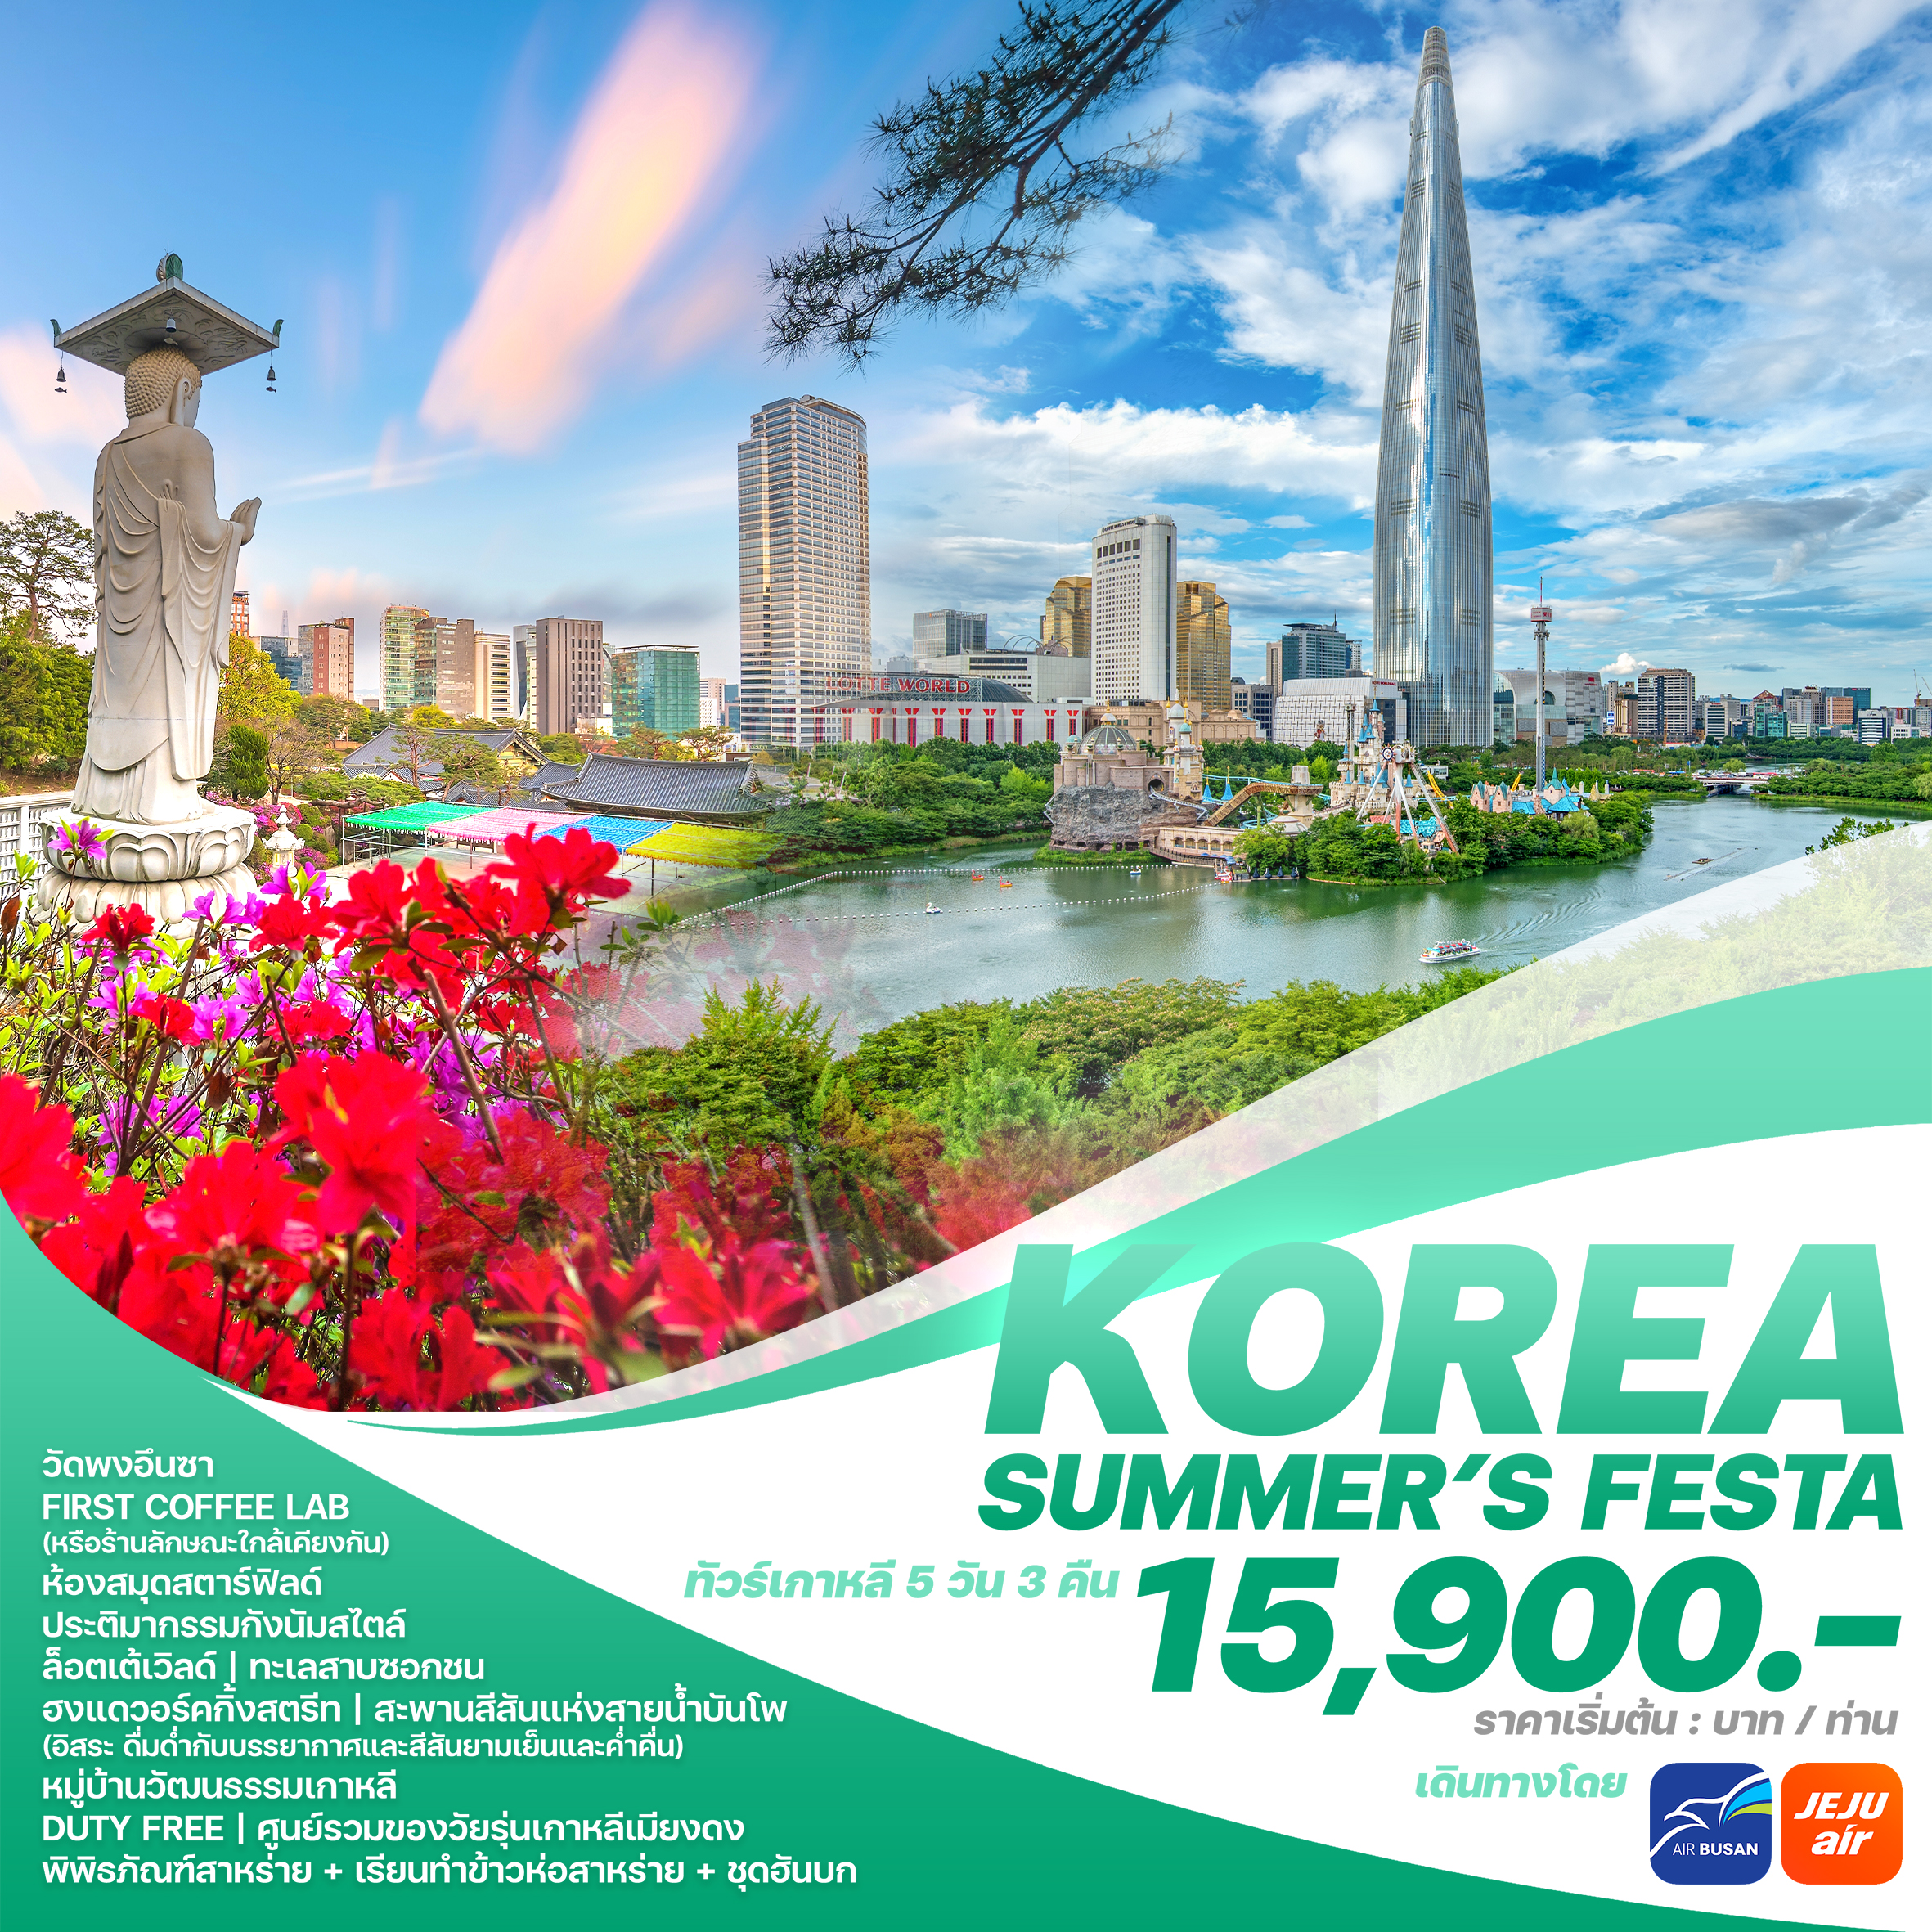 KOREA SUMMER'S FESTA 5 วัน 3 คืน by JEJU AIR